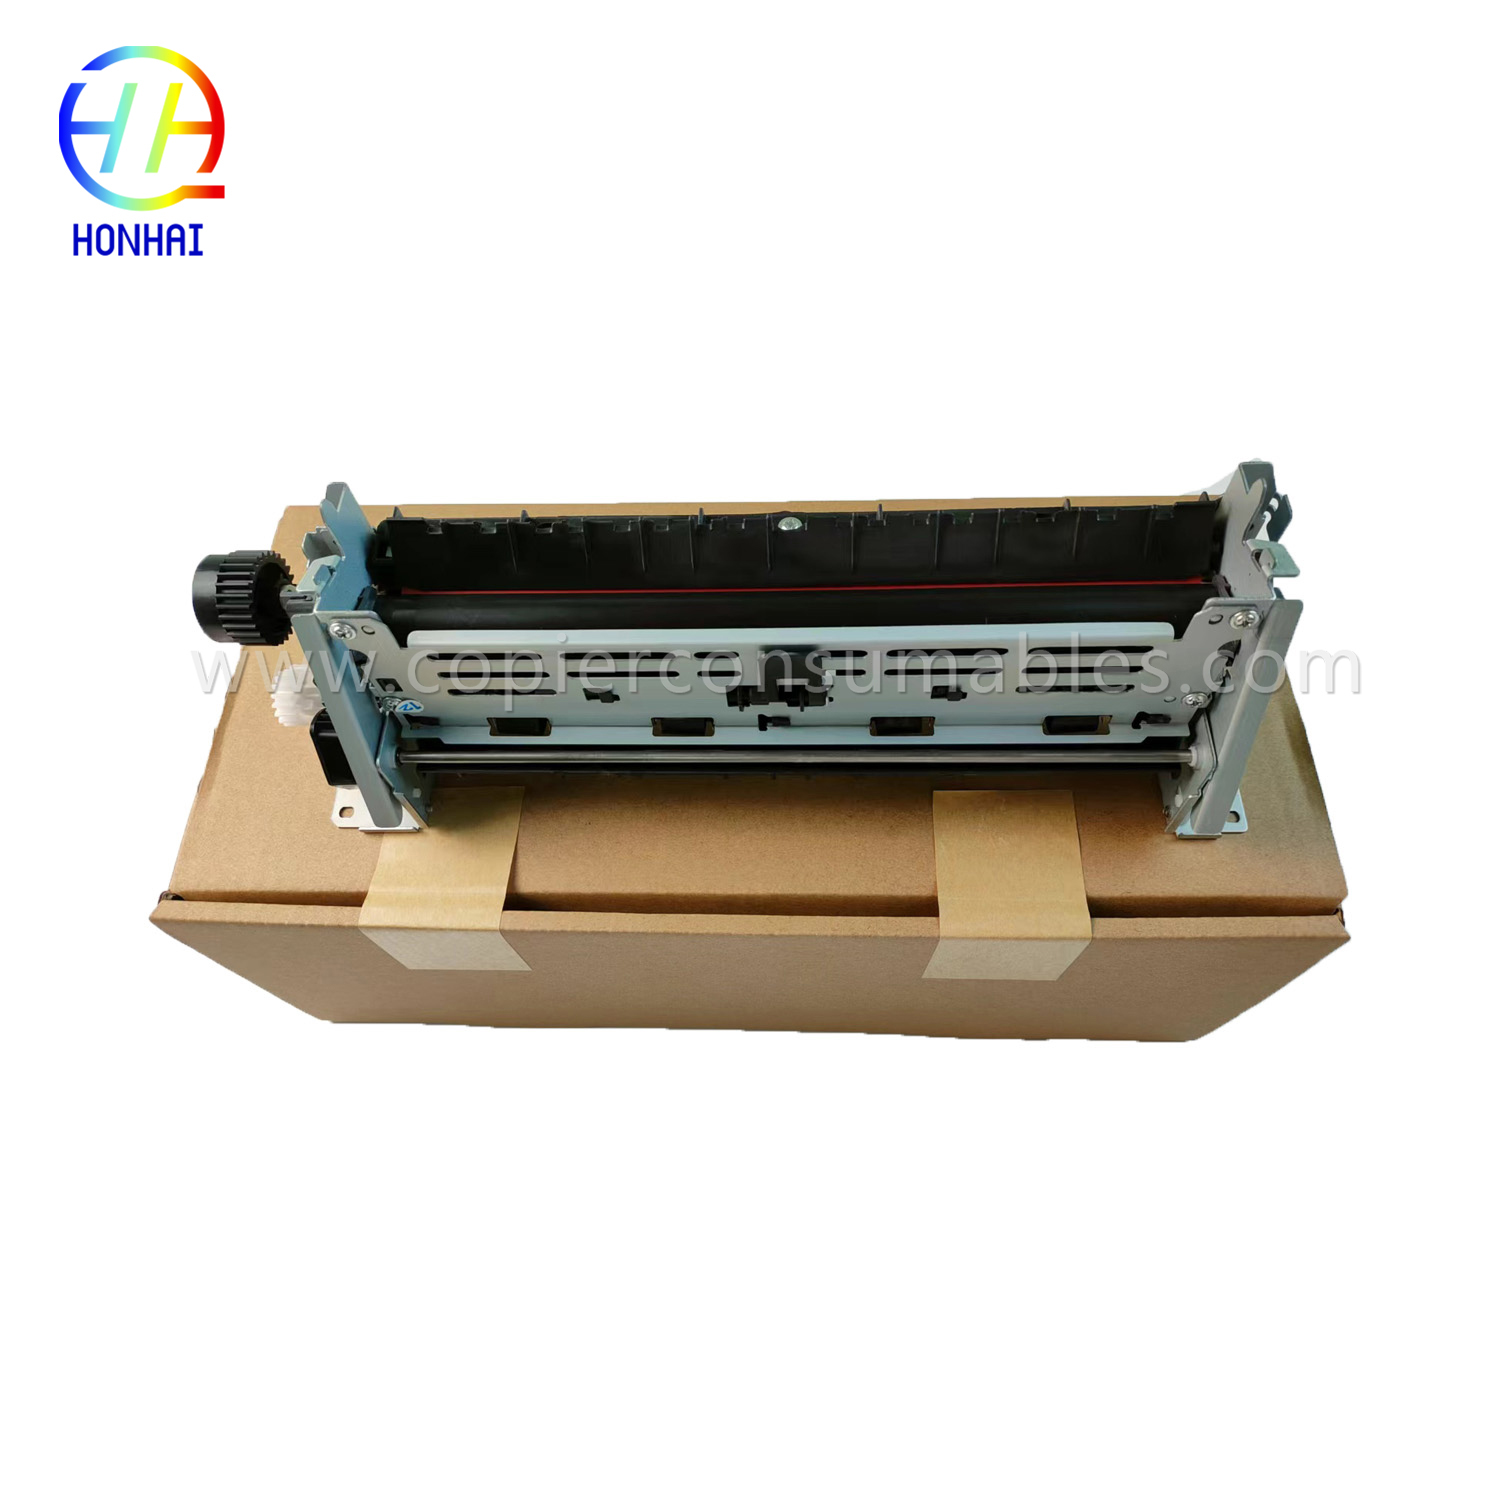 FUSSER FLIM JEDINICA za HP LaserJet Printer Pro 400 M401 M401DN M425 RM1-8809 RM1-8809-000CN sklop grijača 220 v (2).jpg-1 拷贝